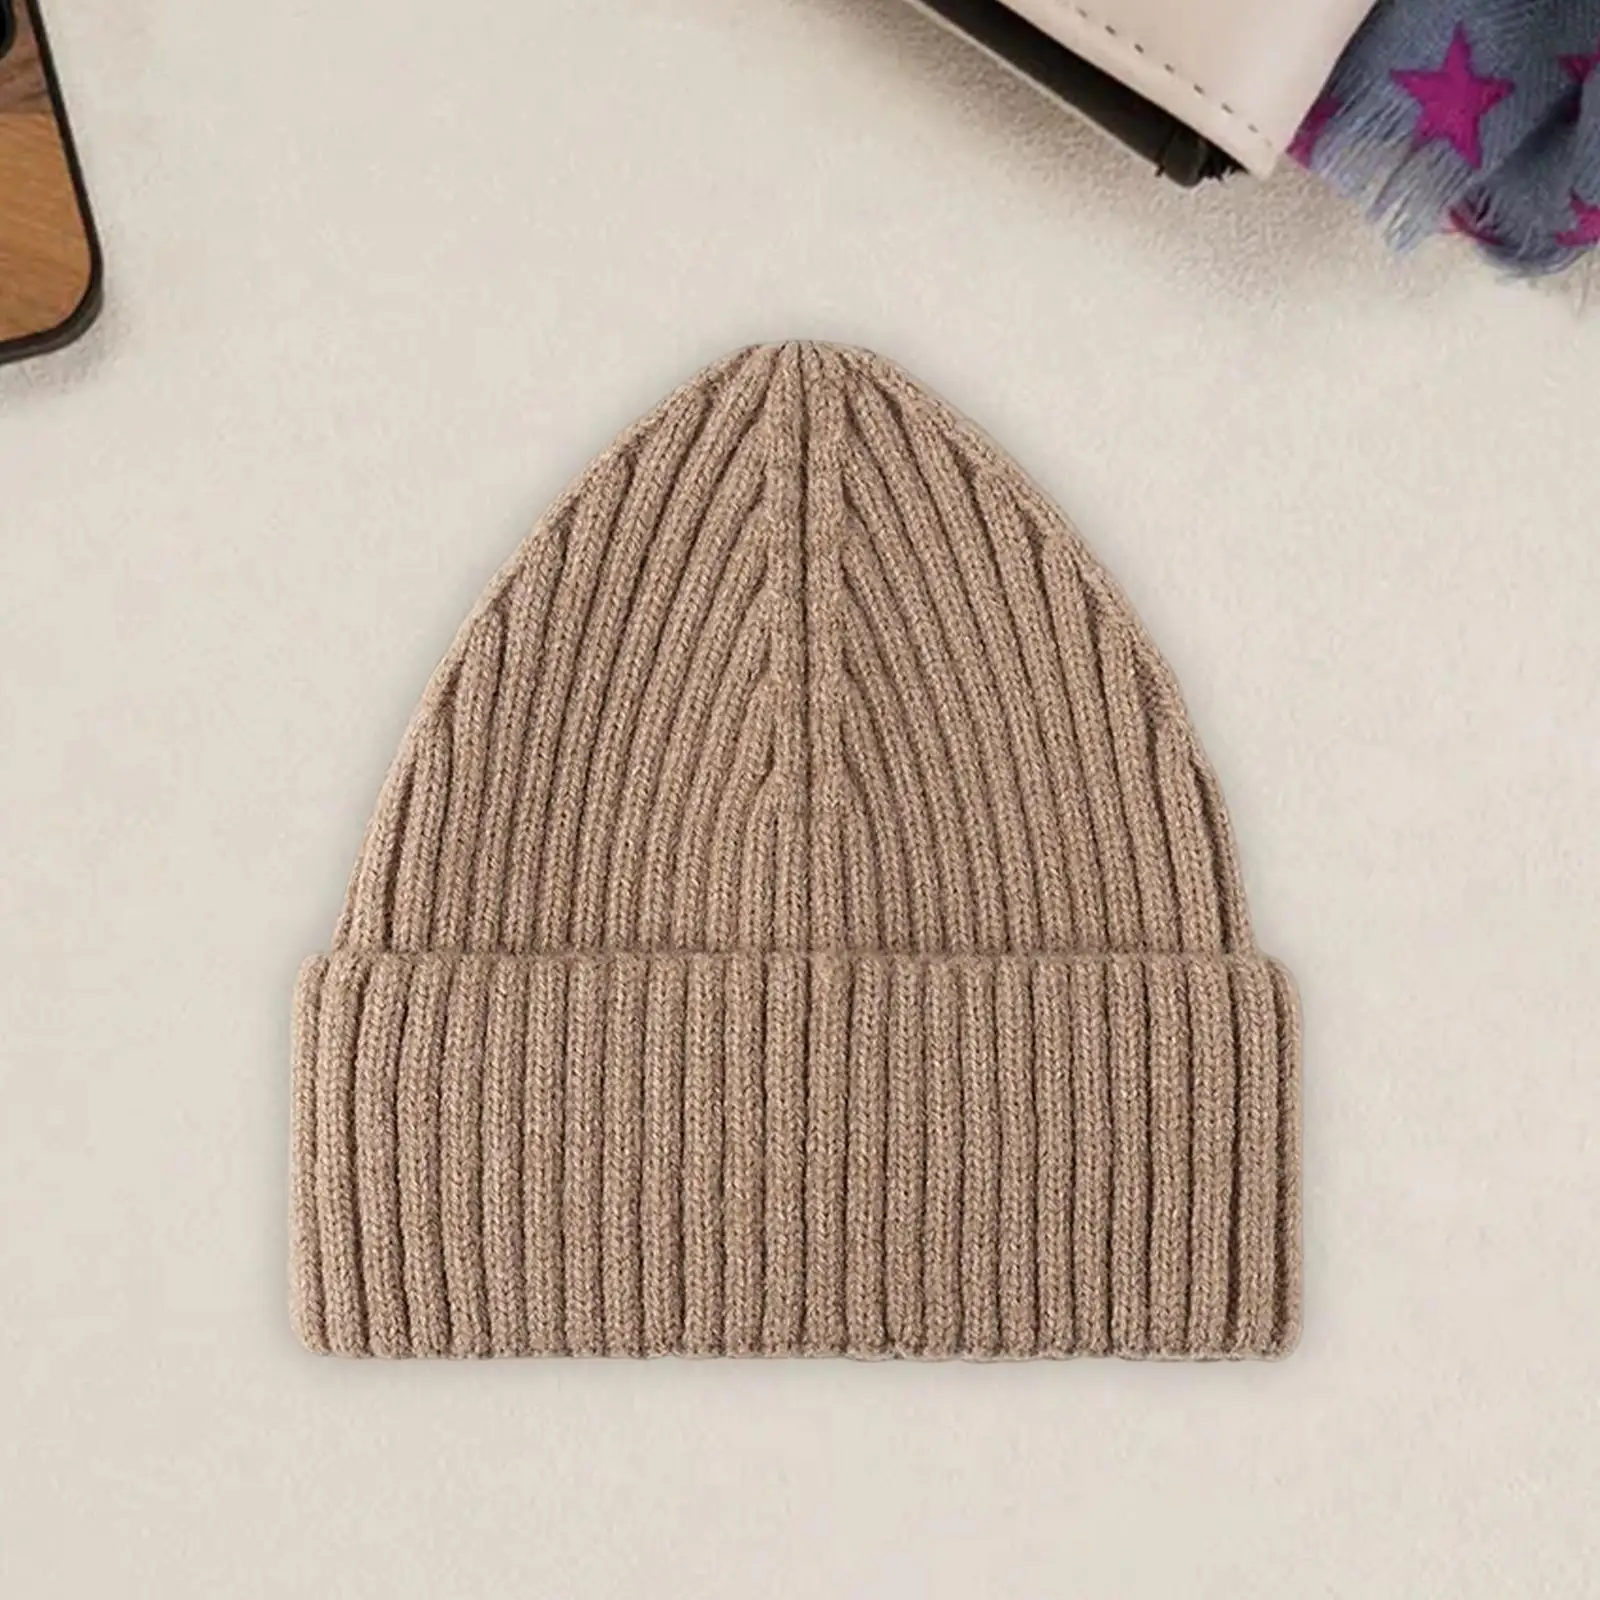 Warm Skull Caps Winter Knit Cap Clothing Headwrap for Women Climbing Outdoor